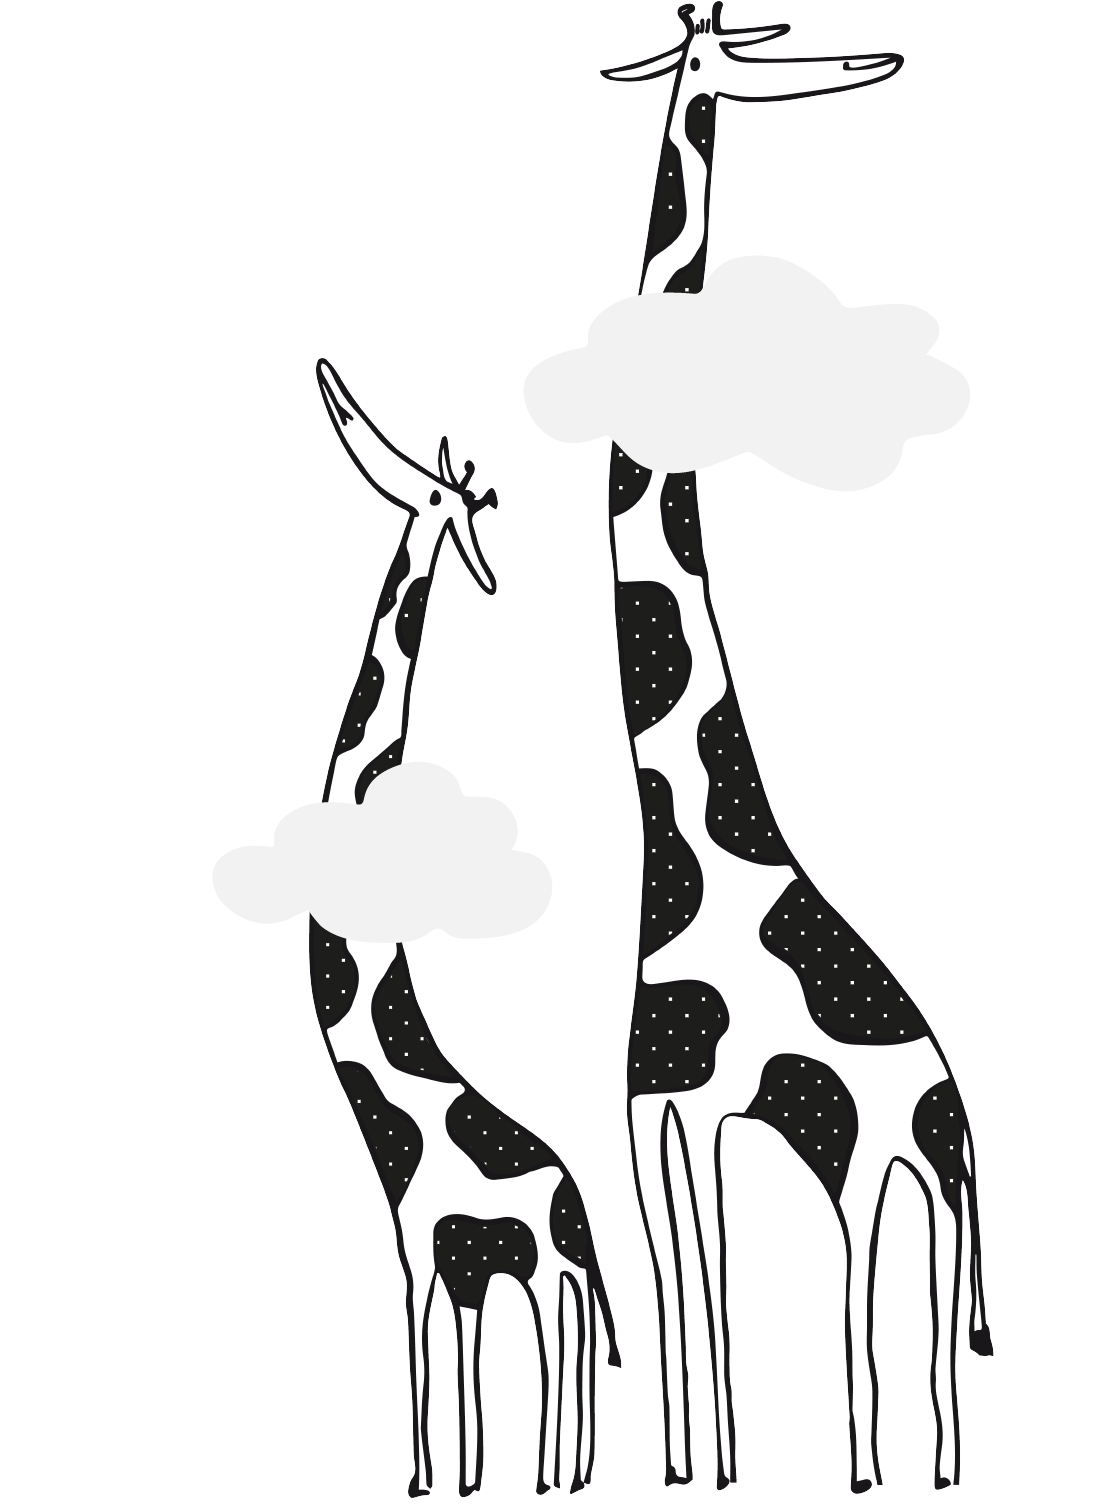 ALLERTA METEO giraffe